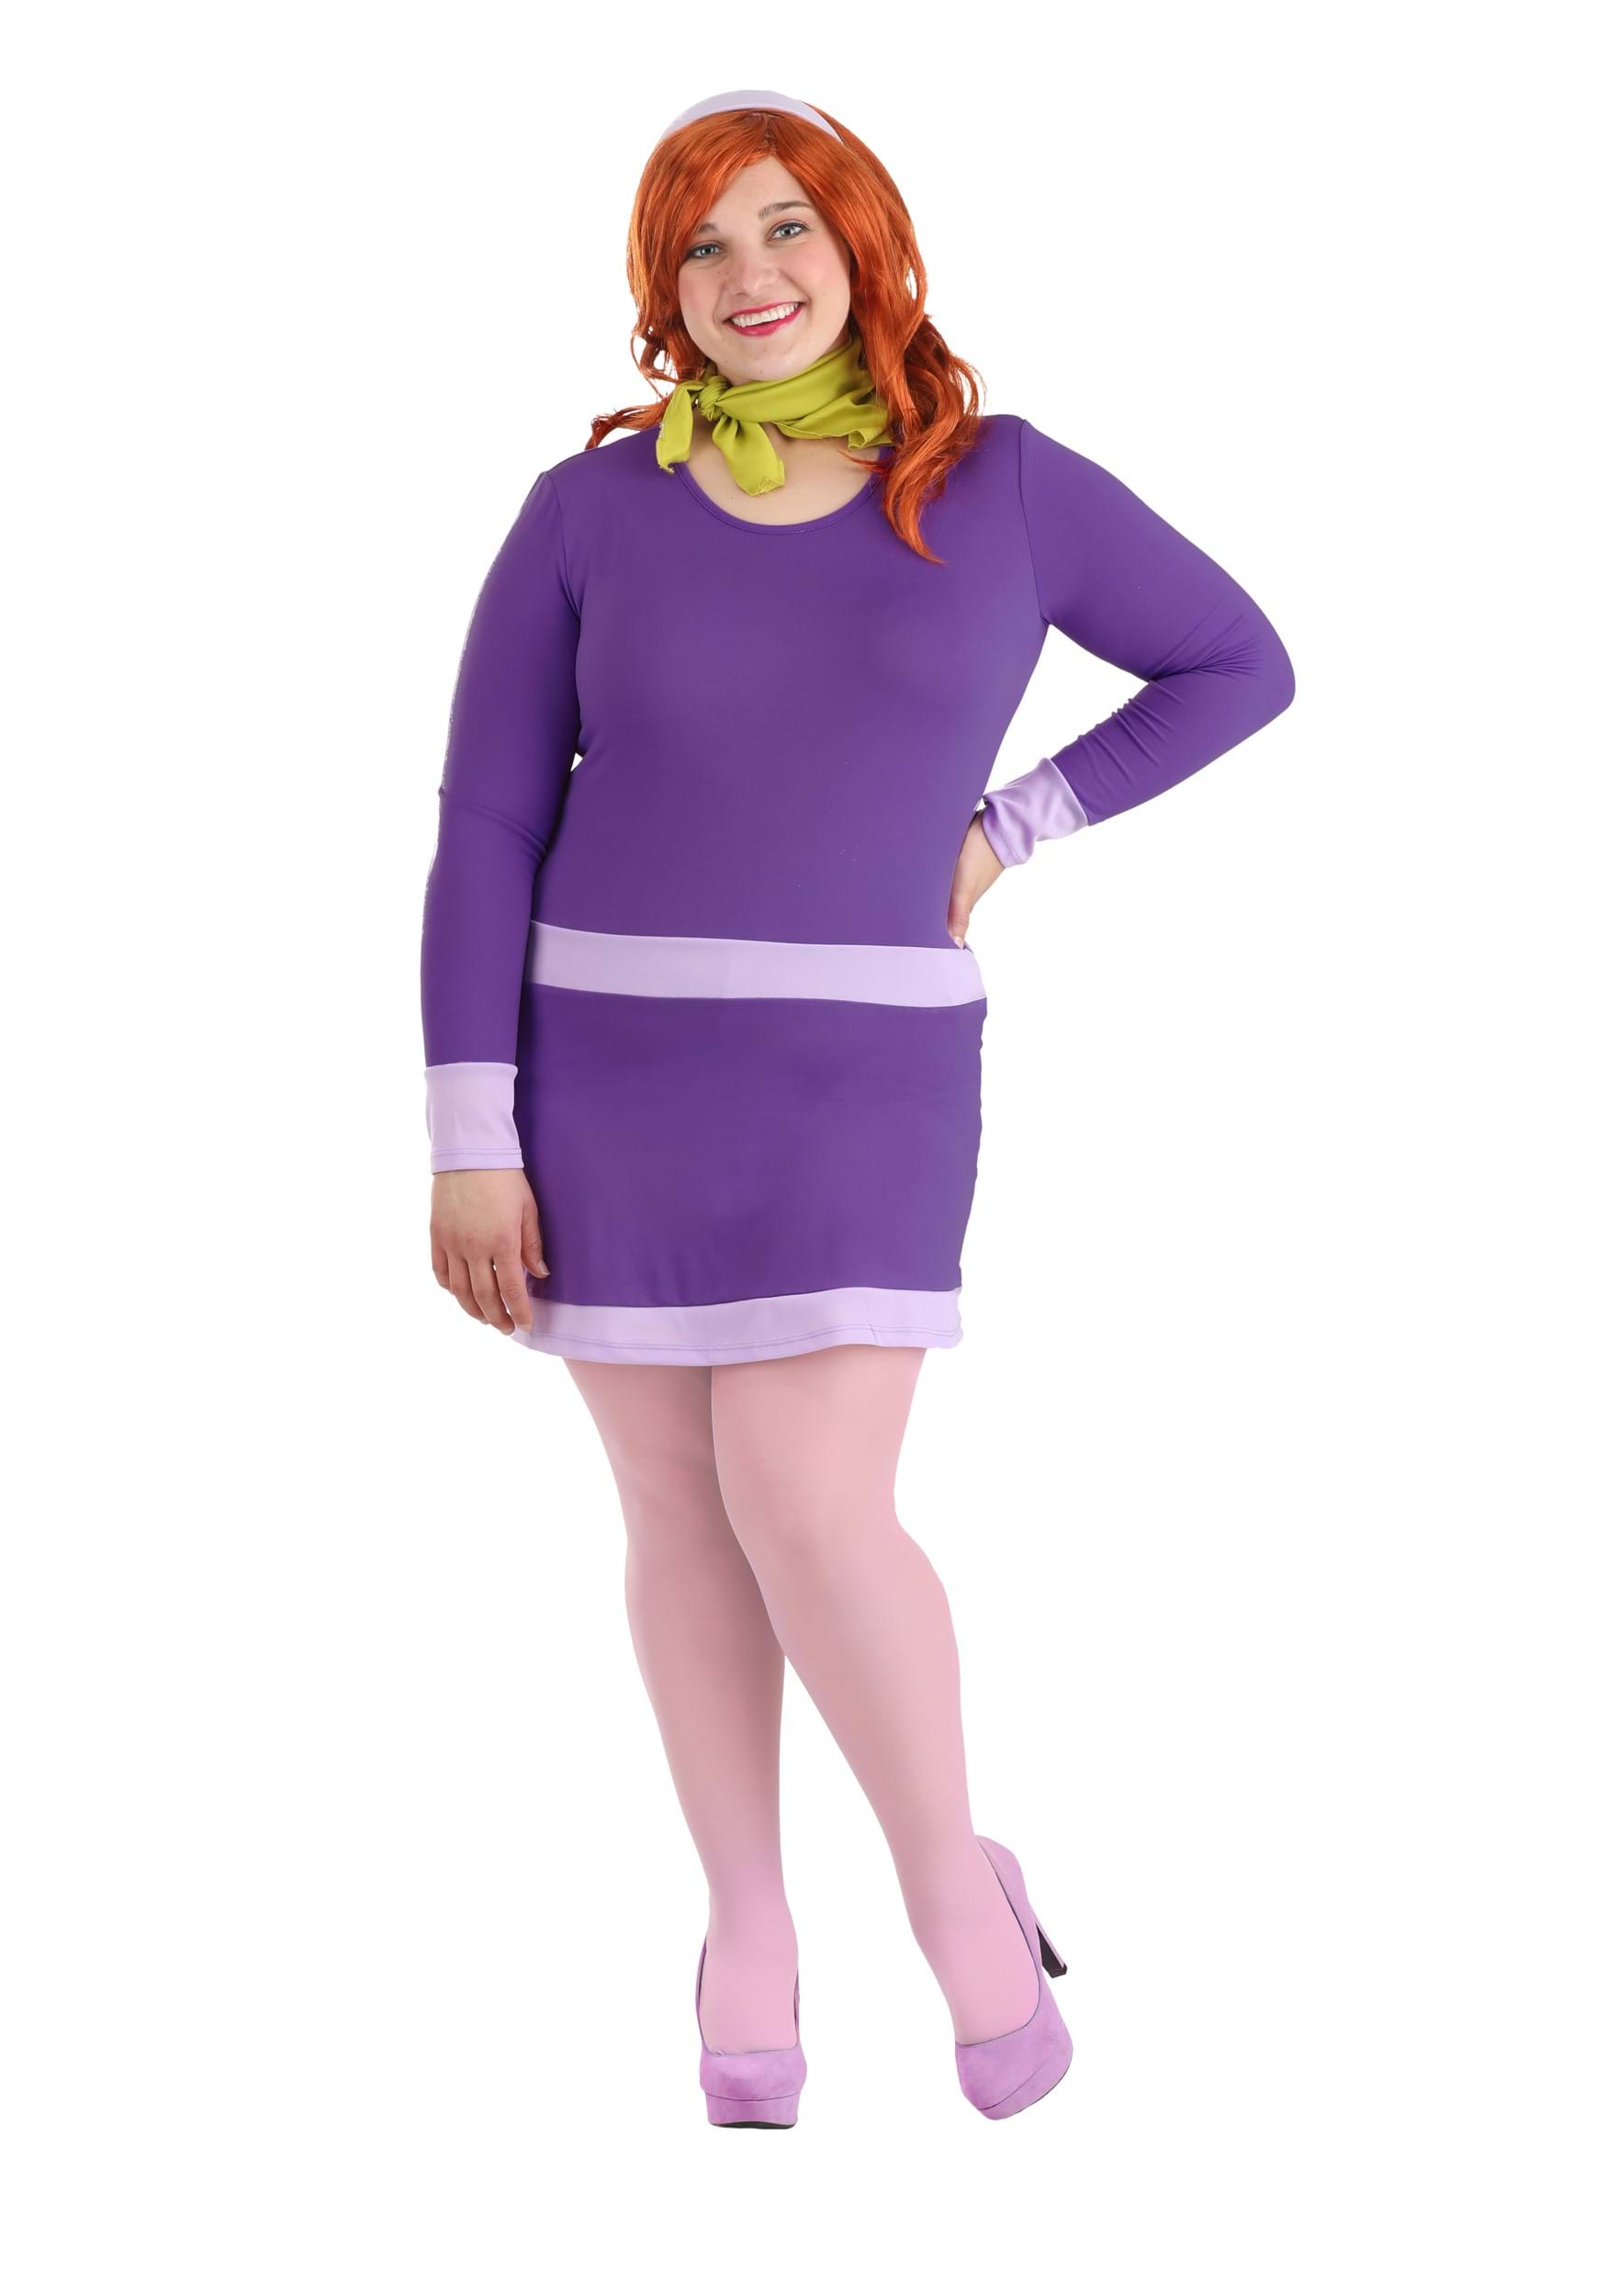 Scooby-Doo Velma & Daphne Costume for Women Halloween Cosplay Costume